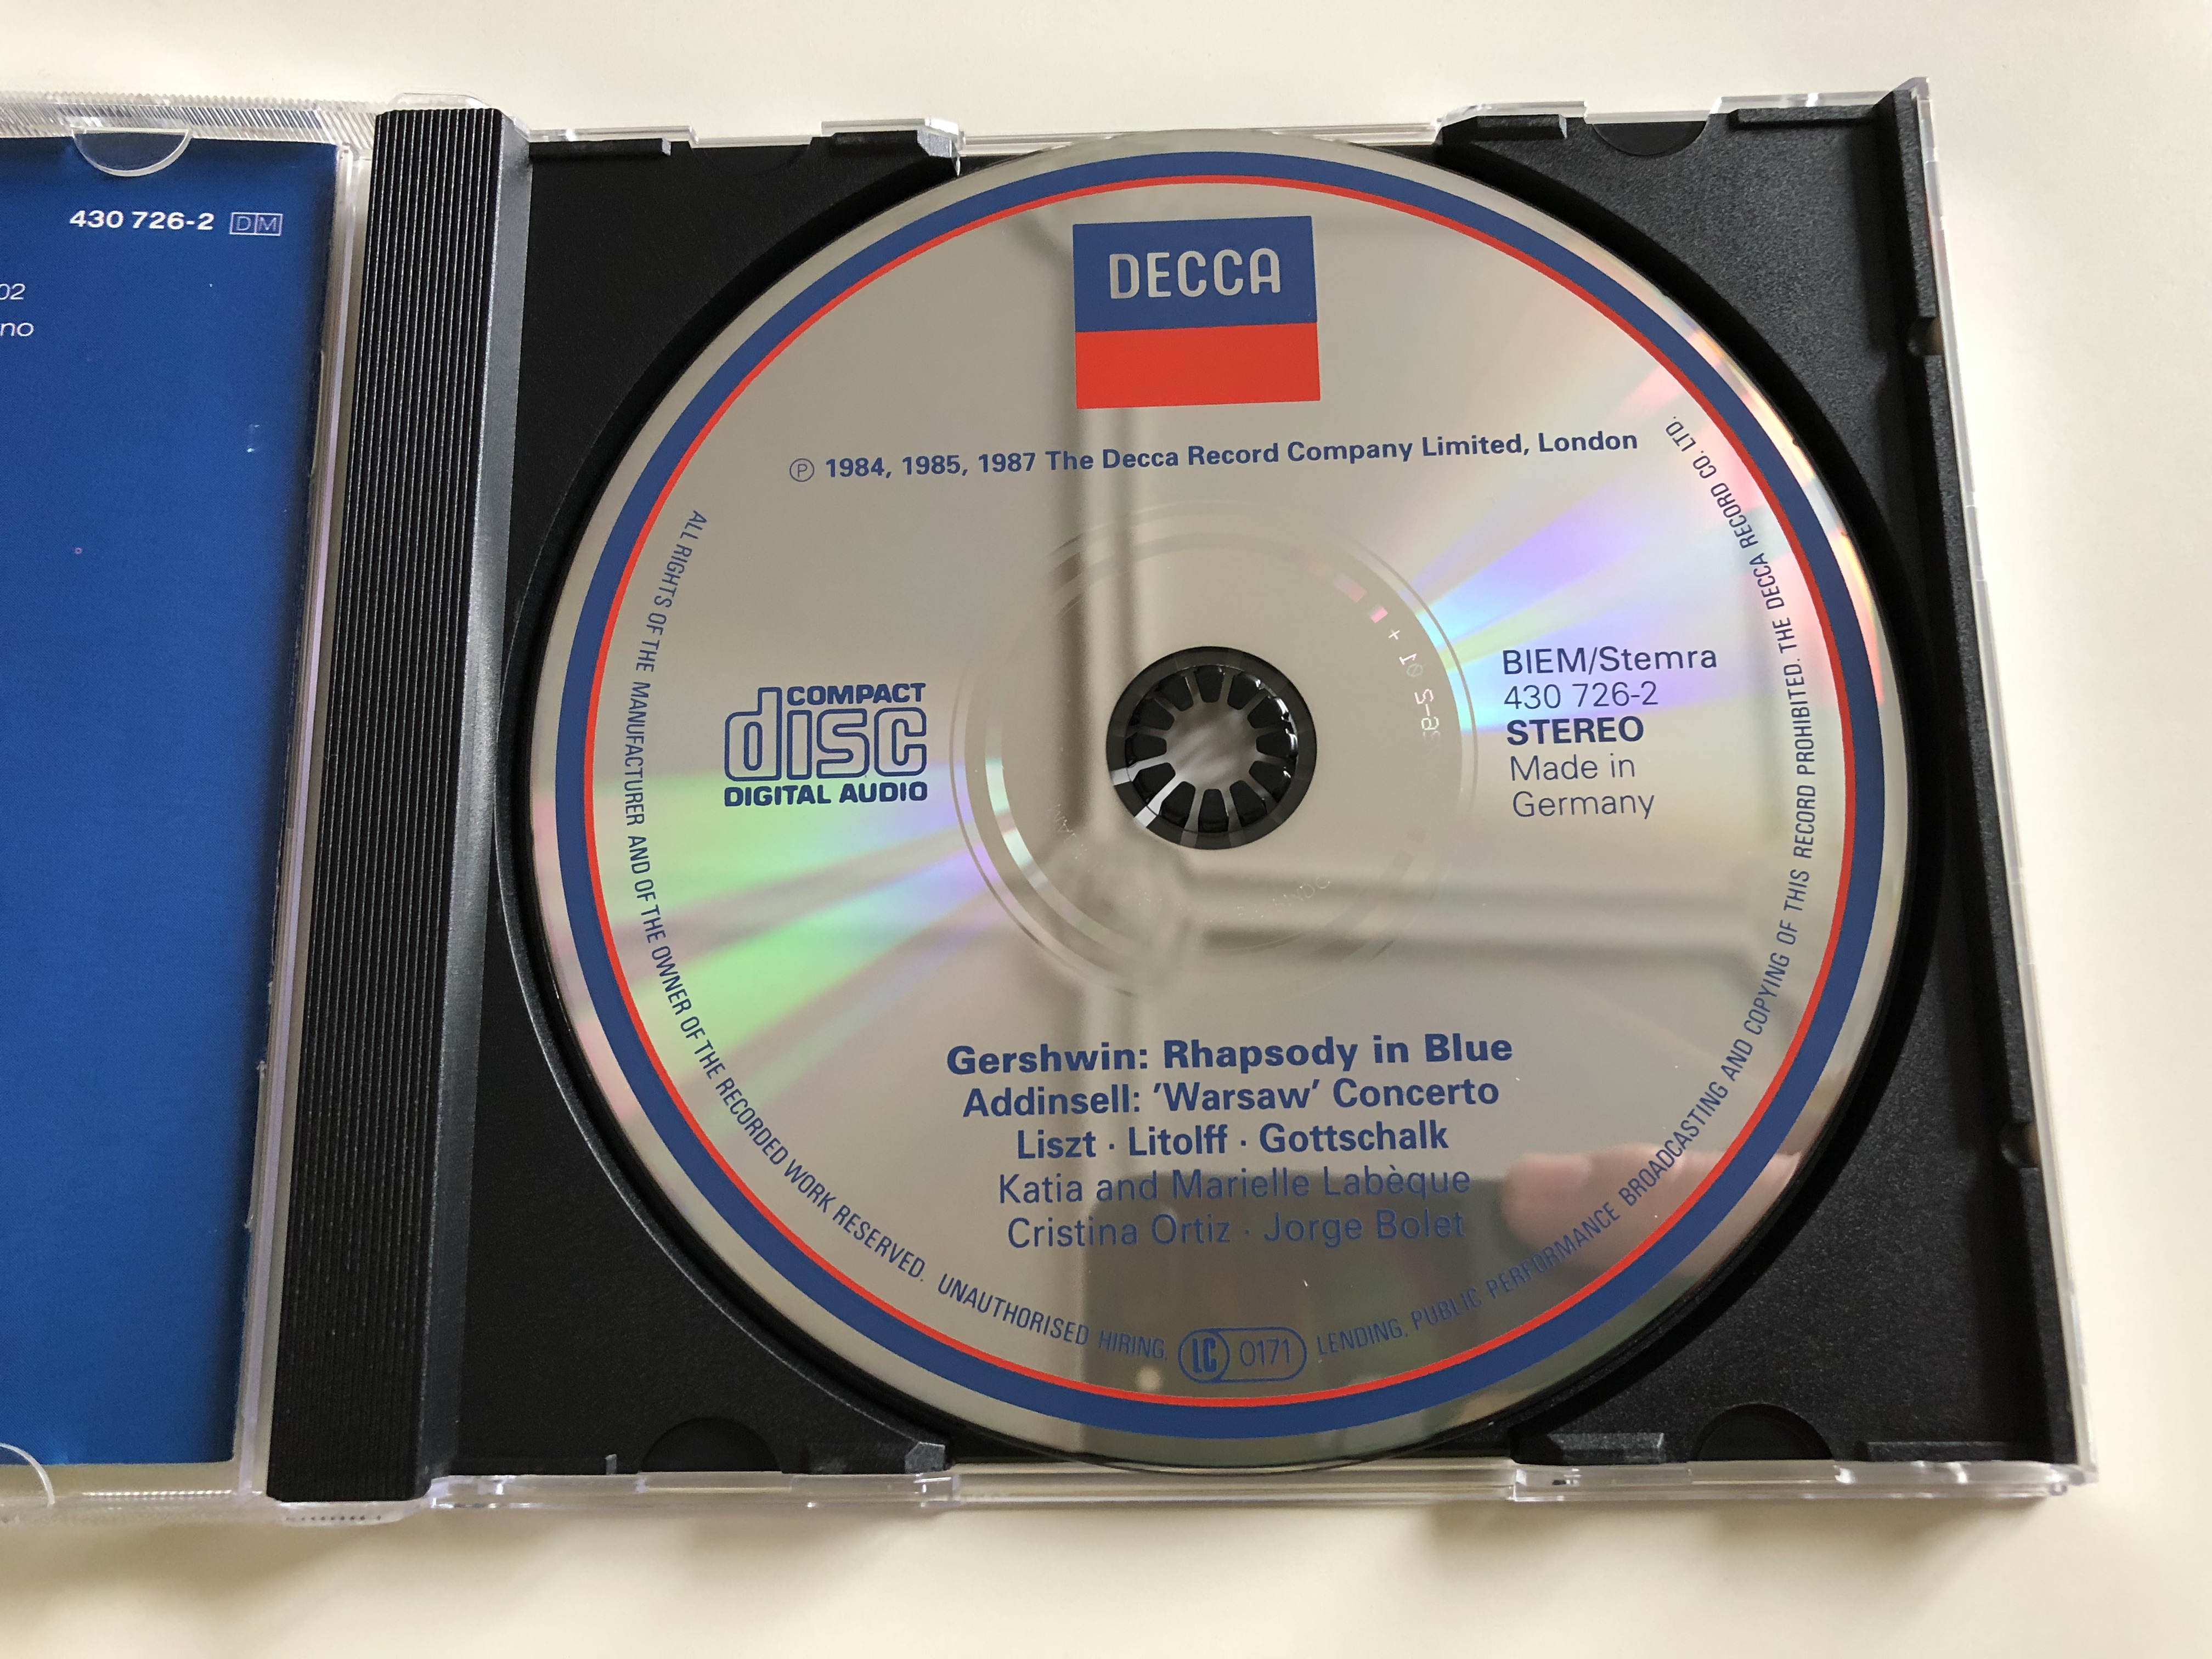 gershwin-rhapsody-in-blue-addinsell-warsaw-concerto-audio-cd-1991-liszt-litolff-gottschalk-katia-and-marielle-lab-que-cristina-ortiz-jorge-bolet-decca-ba924-3-.jpg